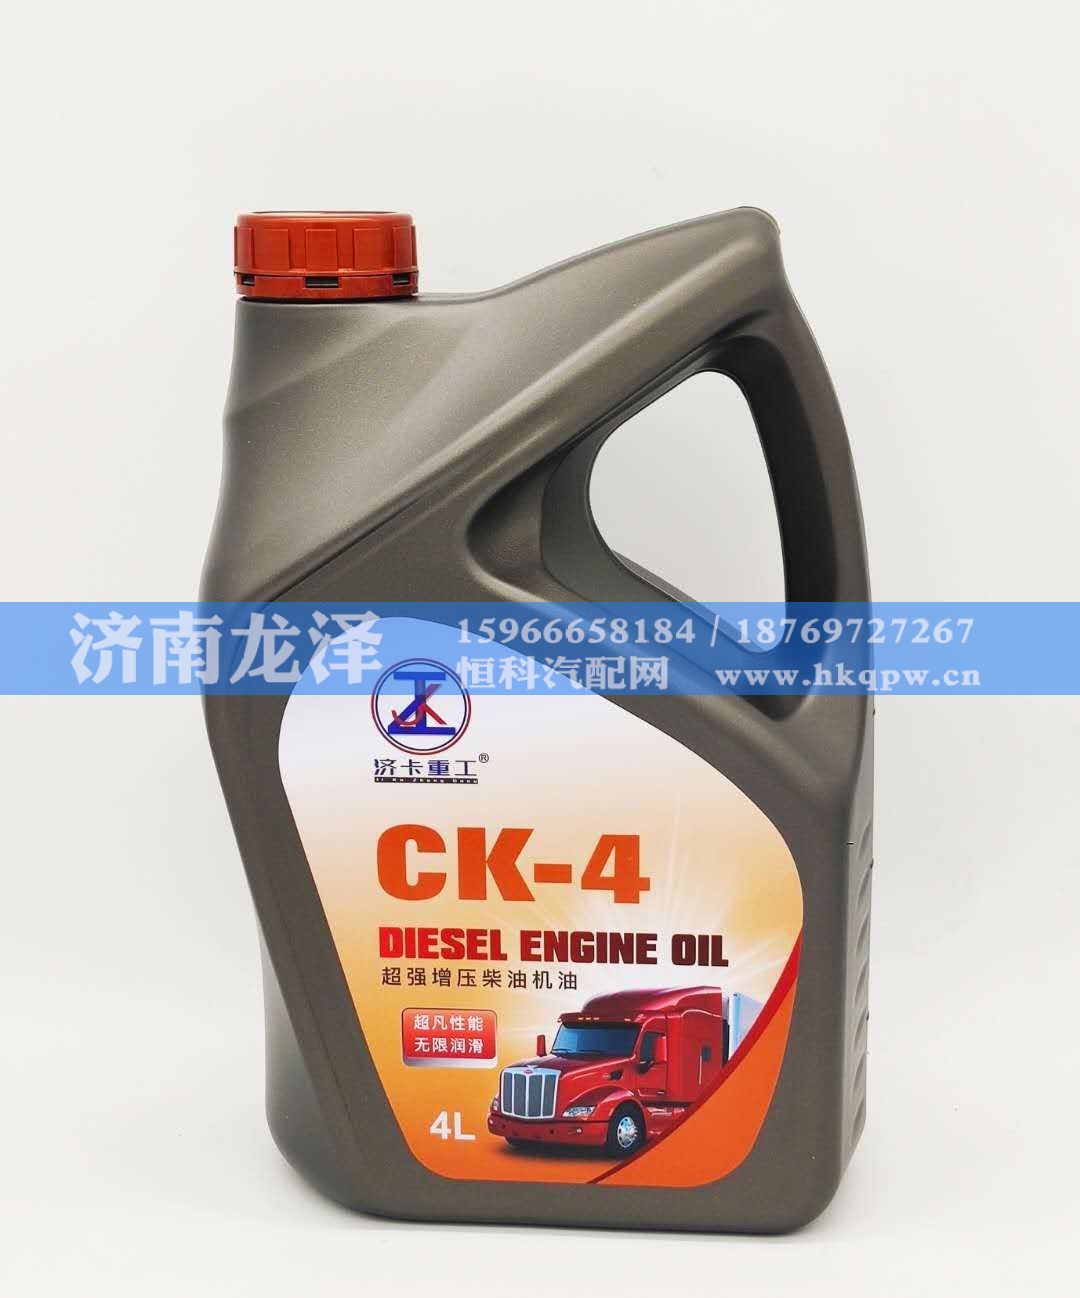 CK-4超强增压柴油机油/CK-4